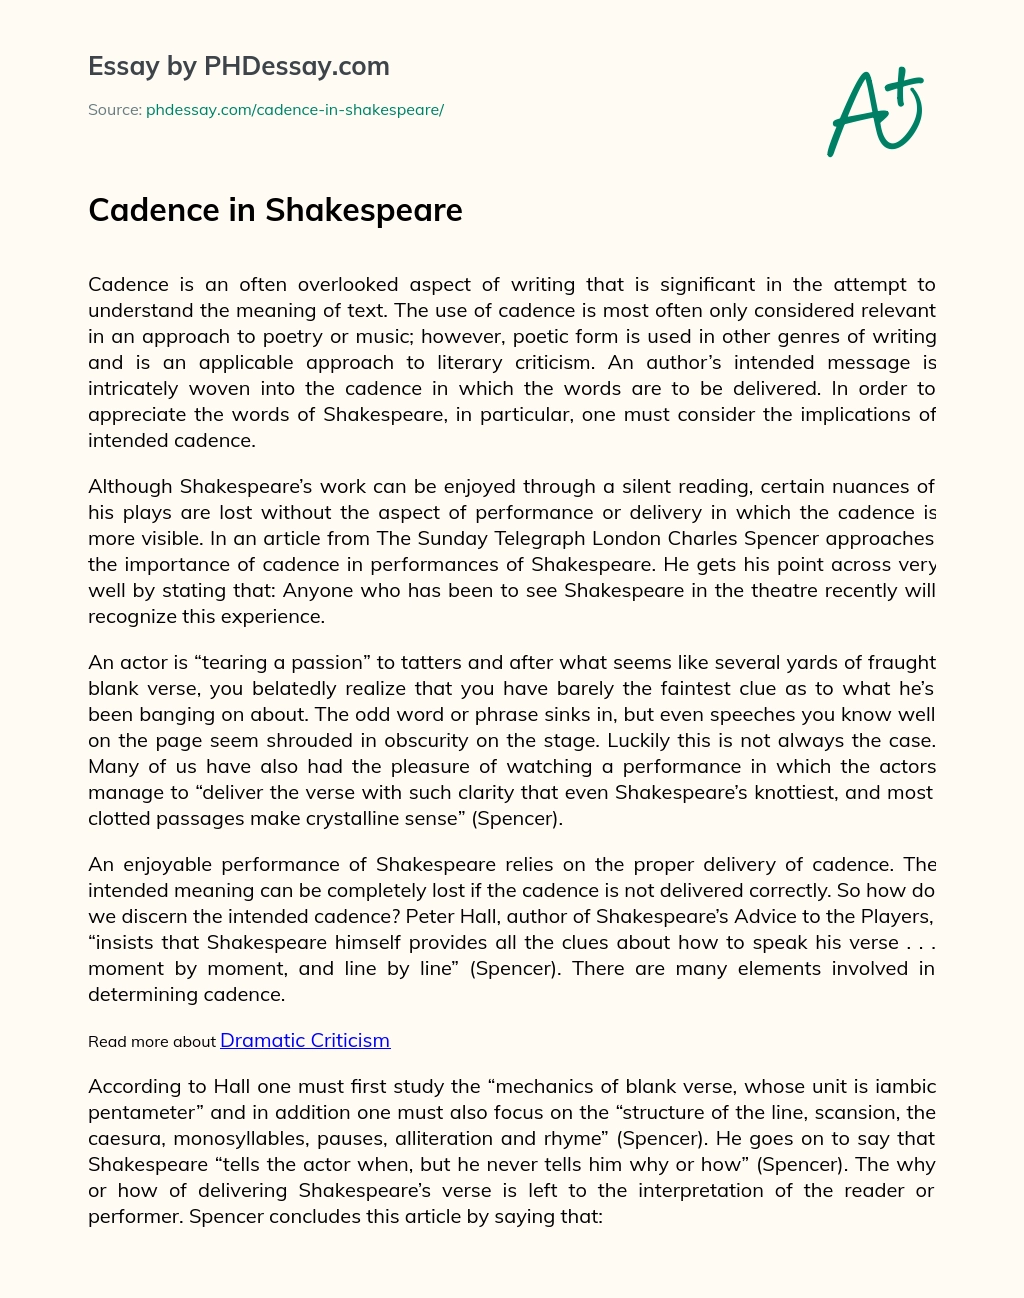 Cadence in Shakespeare essay